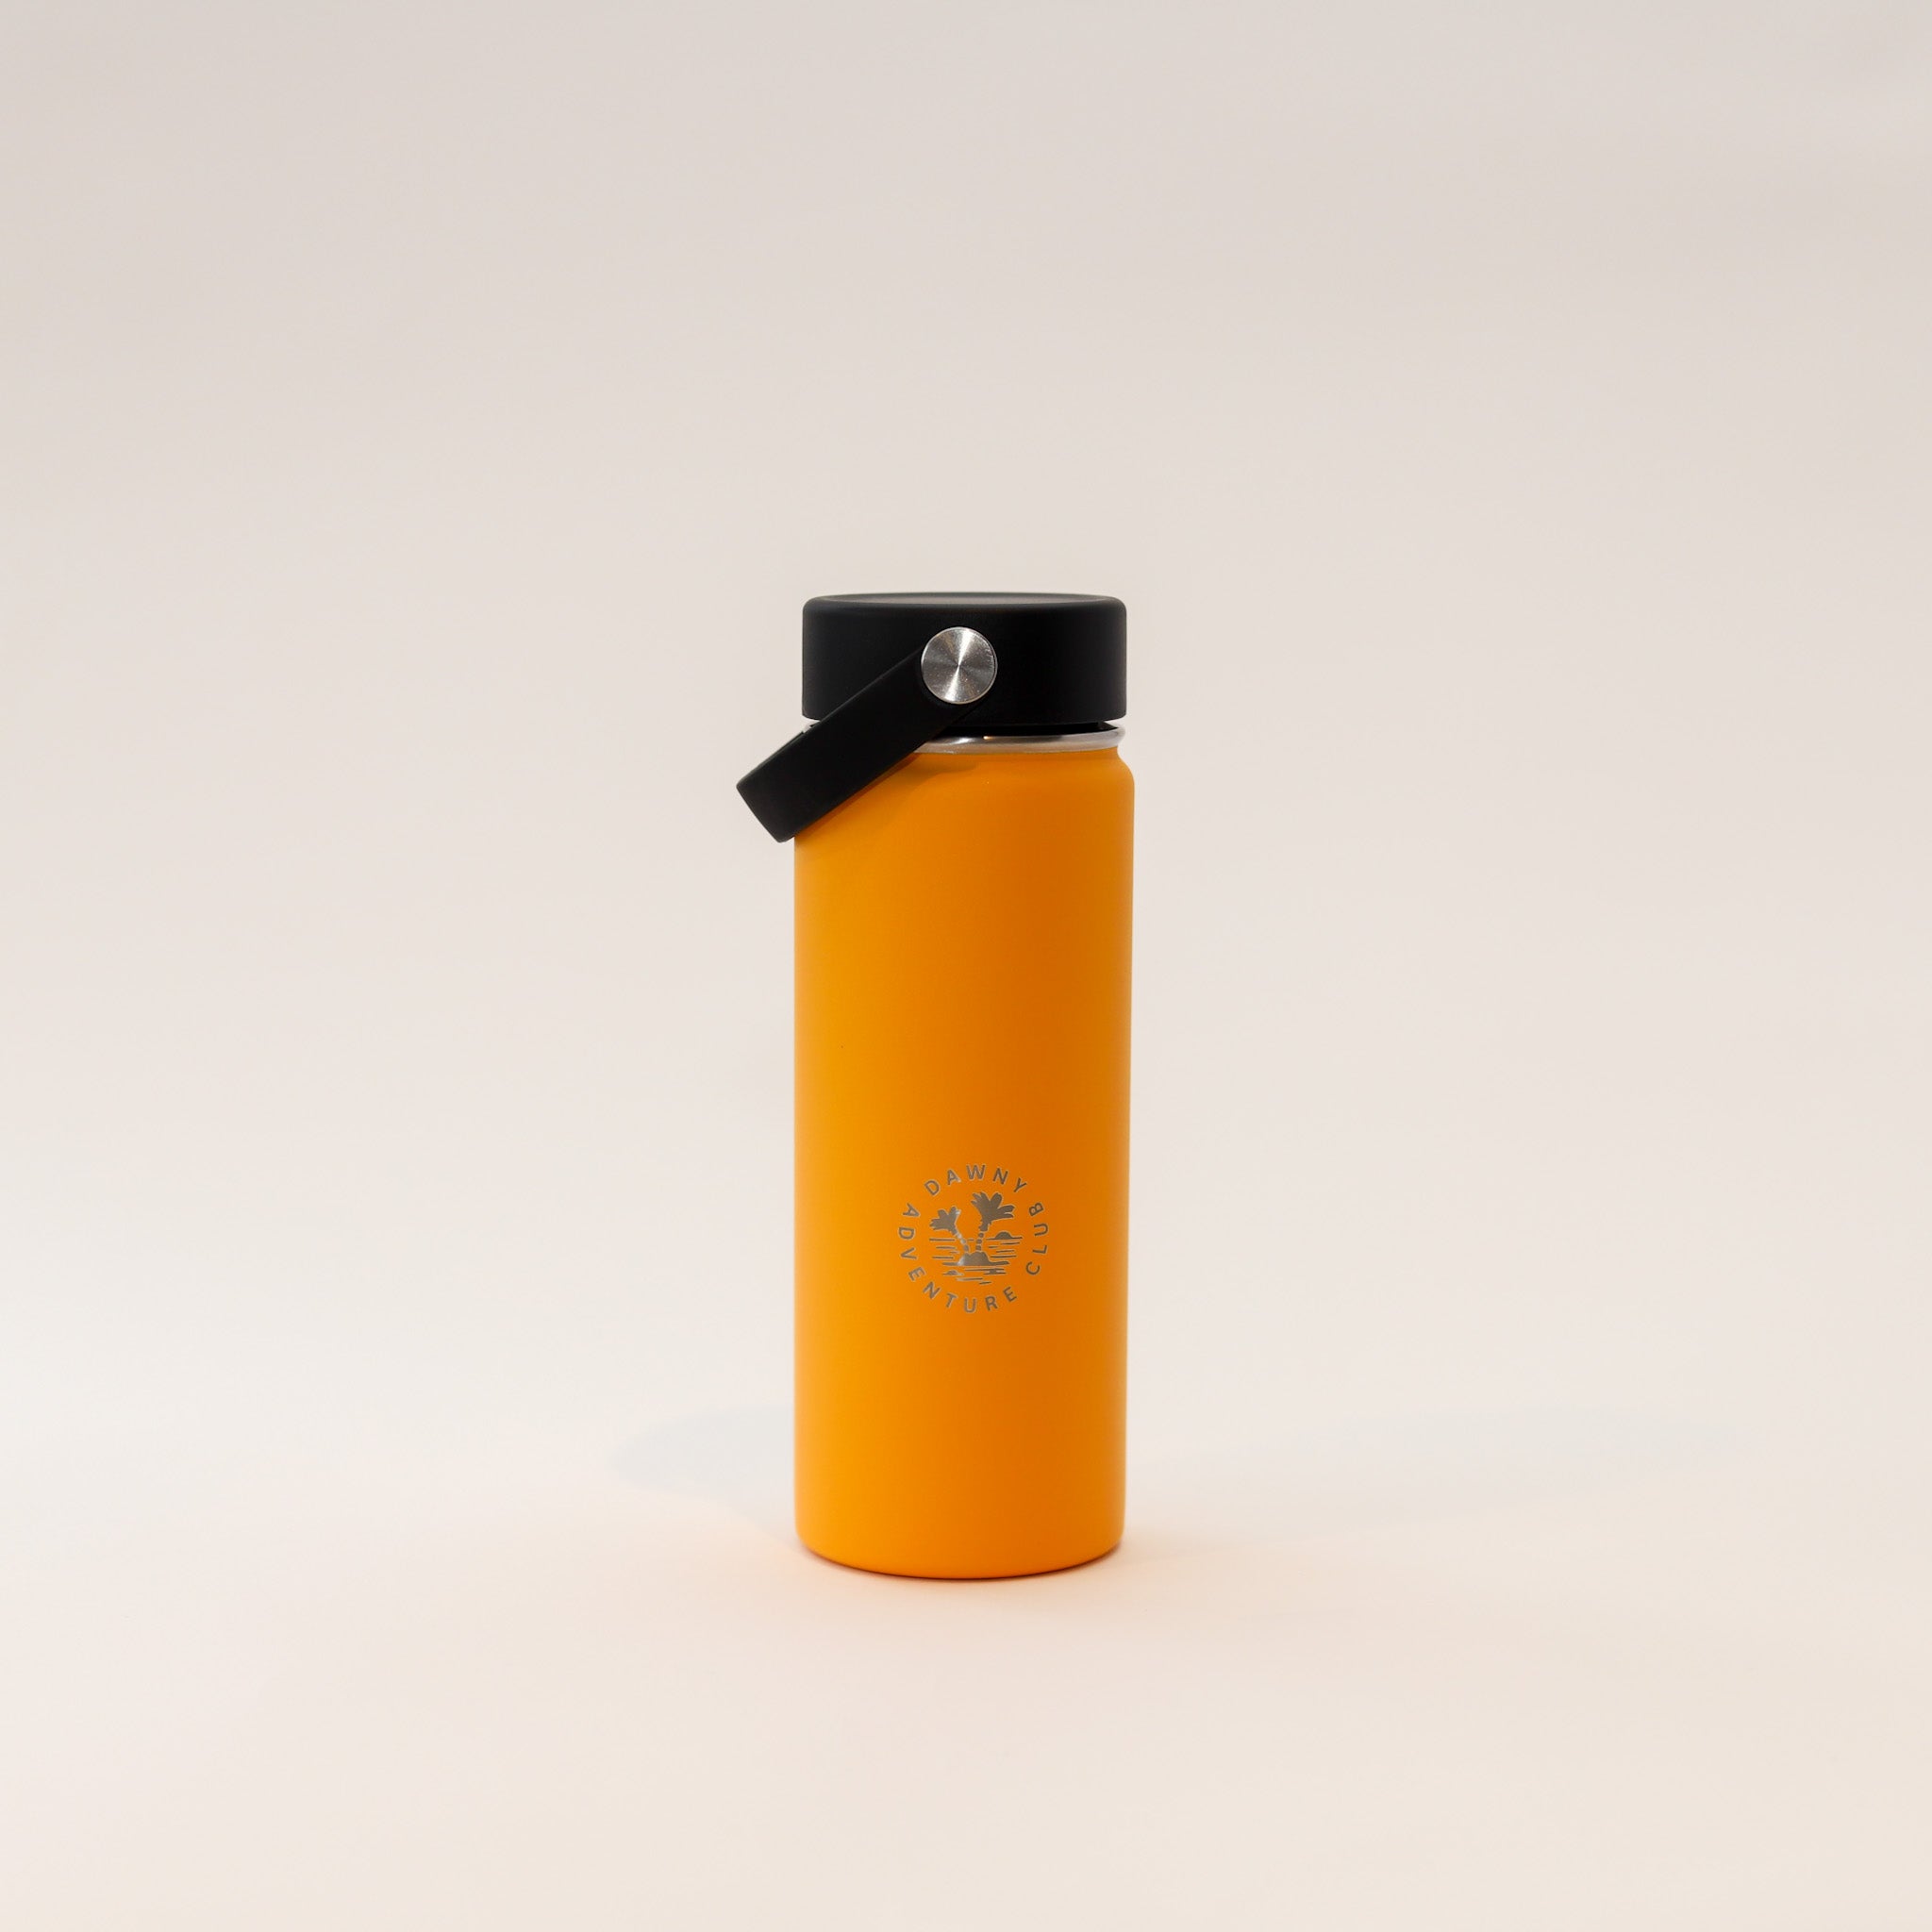 530ml Yellow Orange Dawny Adventure Club Drink Bottle with screw lid and swing handle